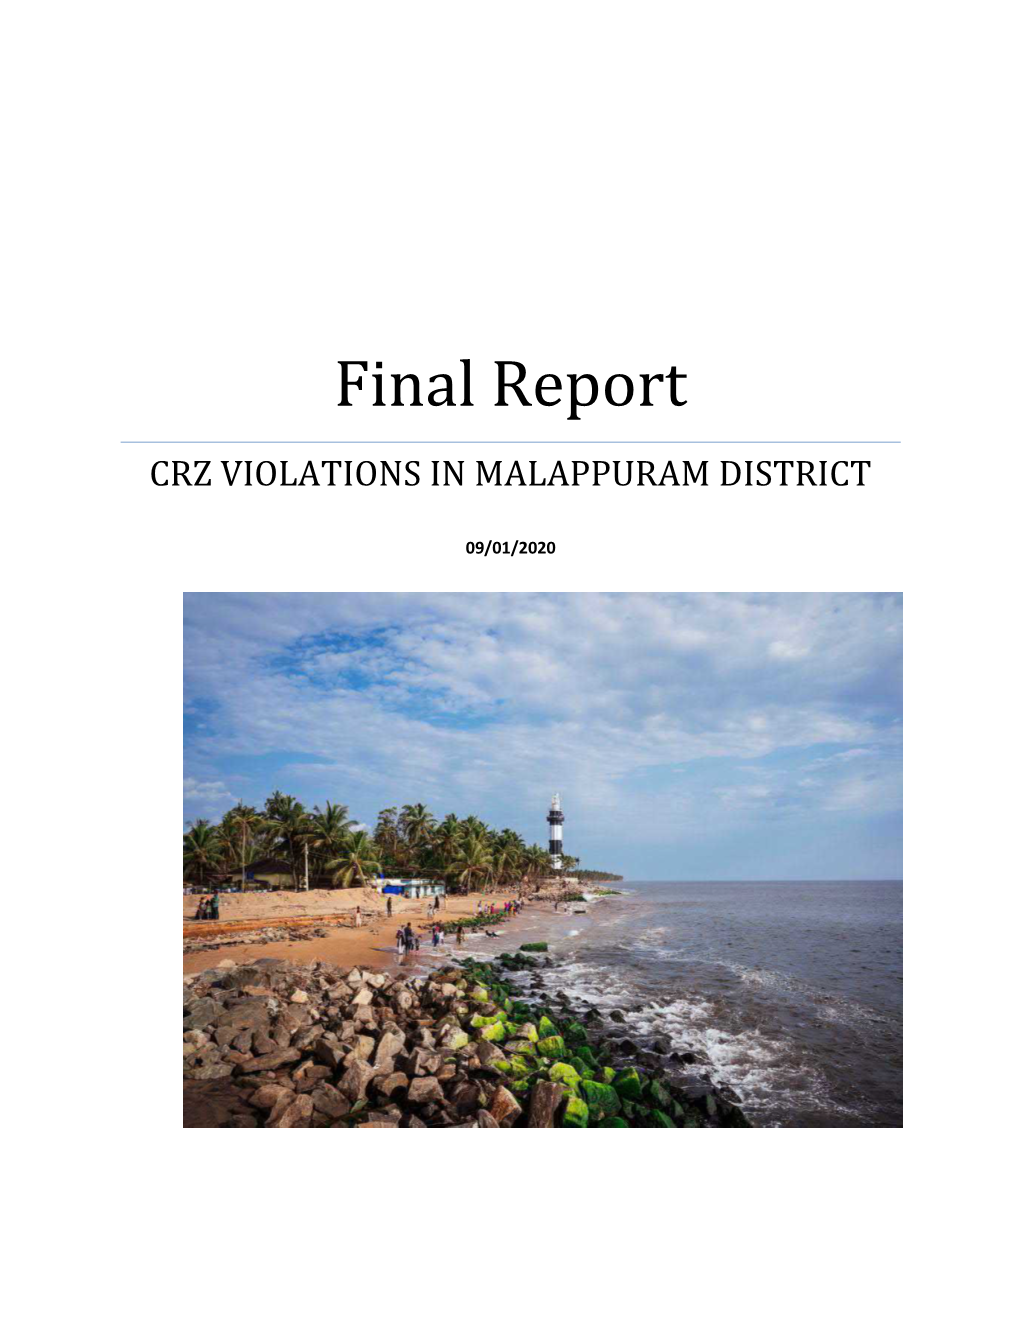 Crz Violations in Malappuram District